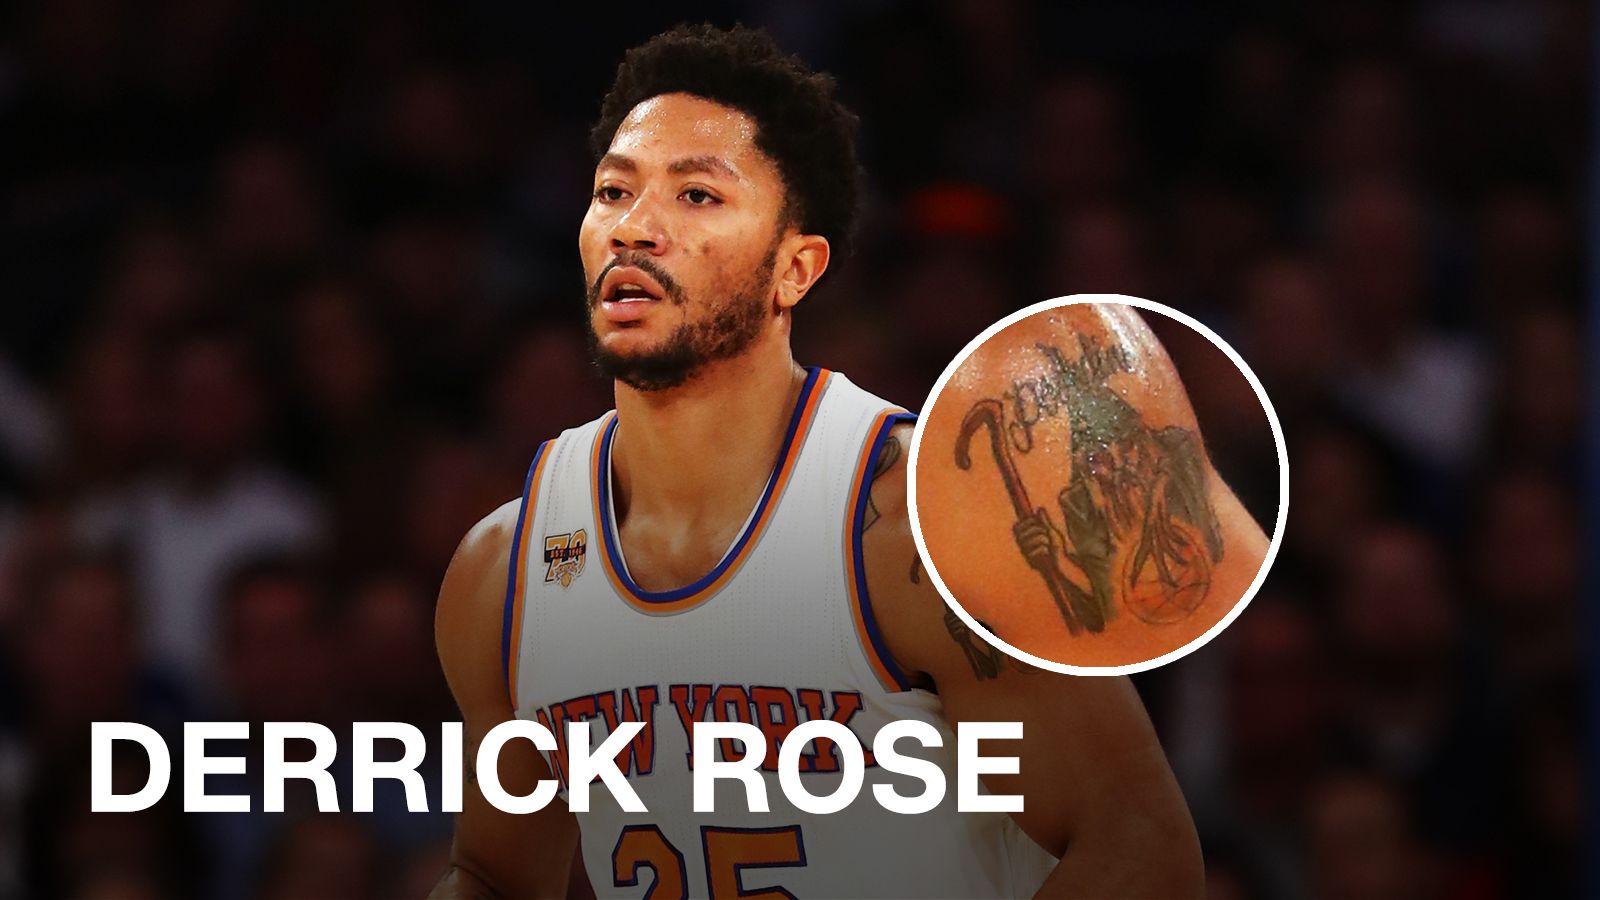 NBA Stars Before Tattoos